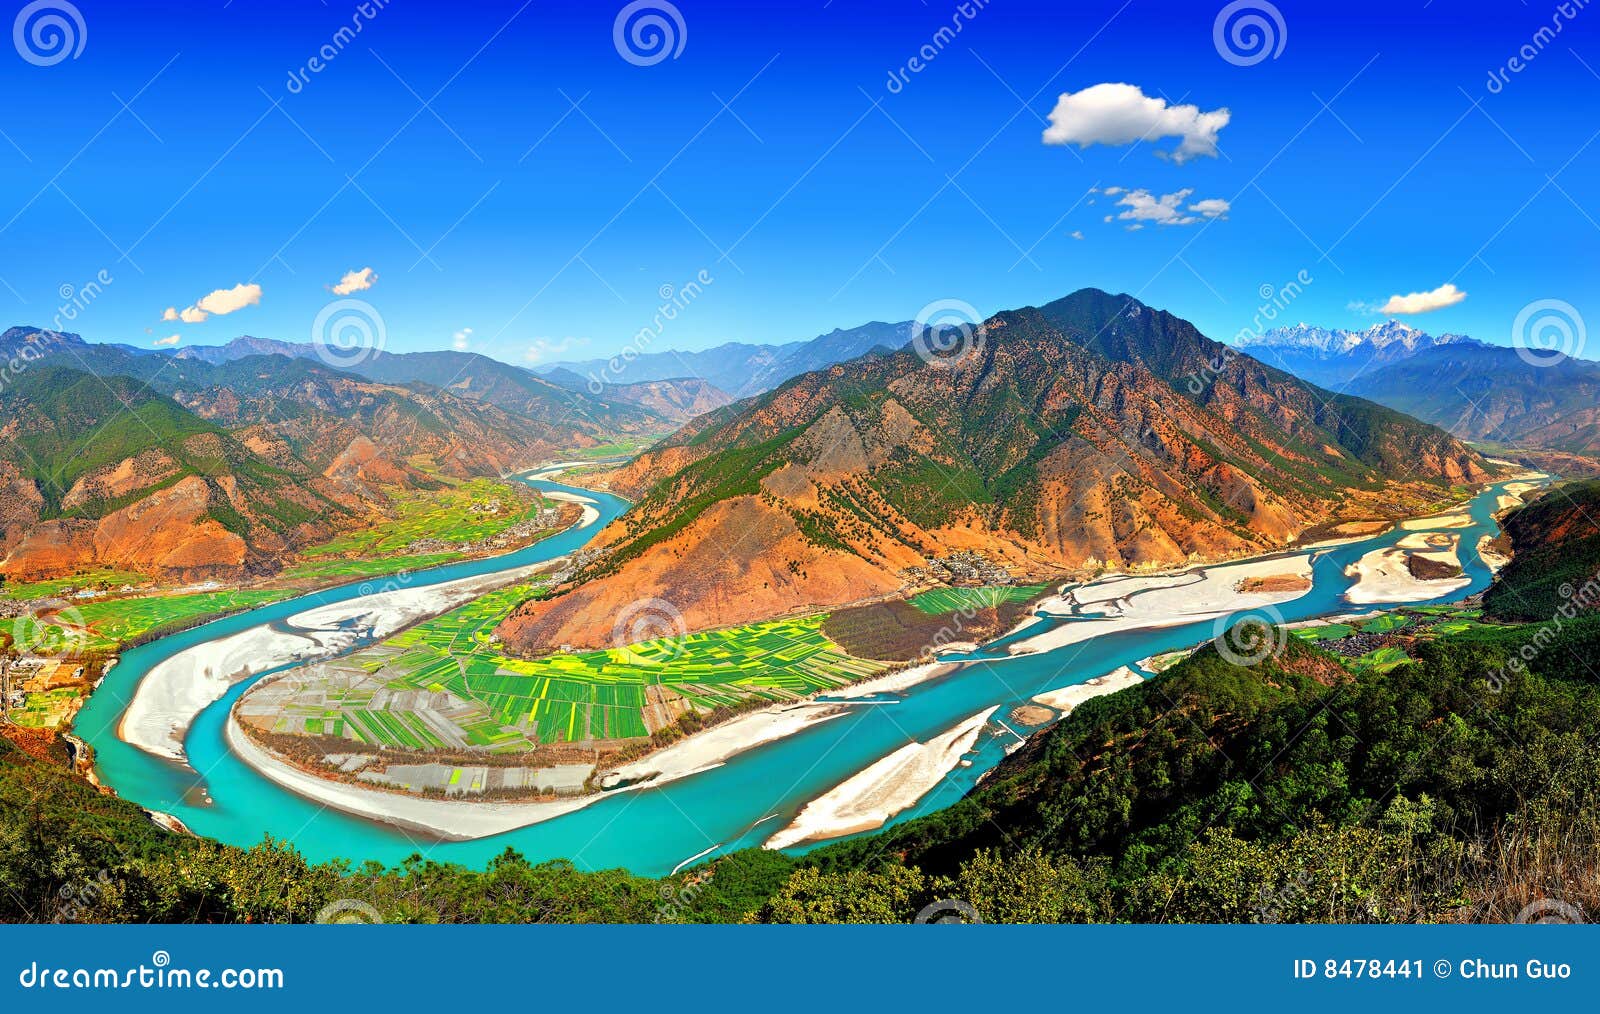 yangtze river first bay